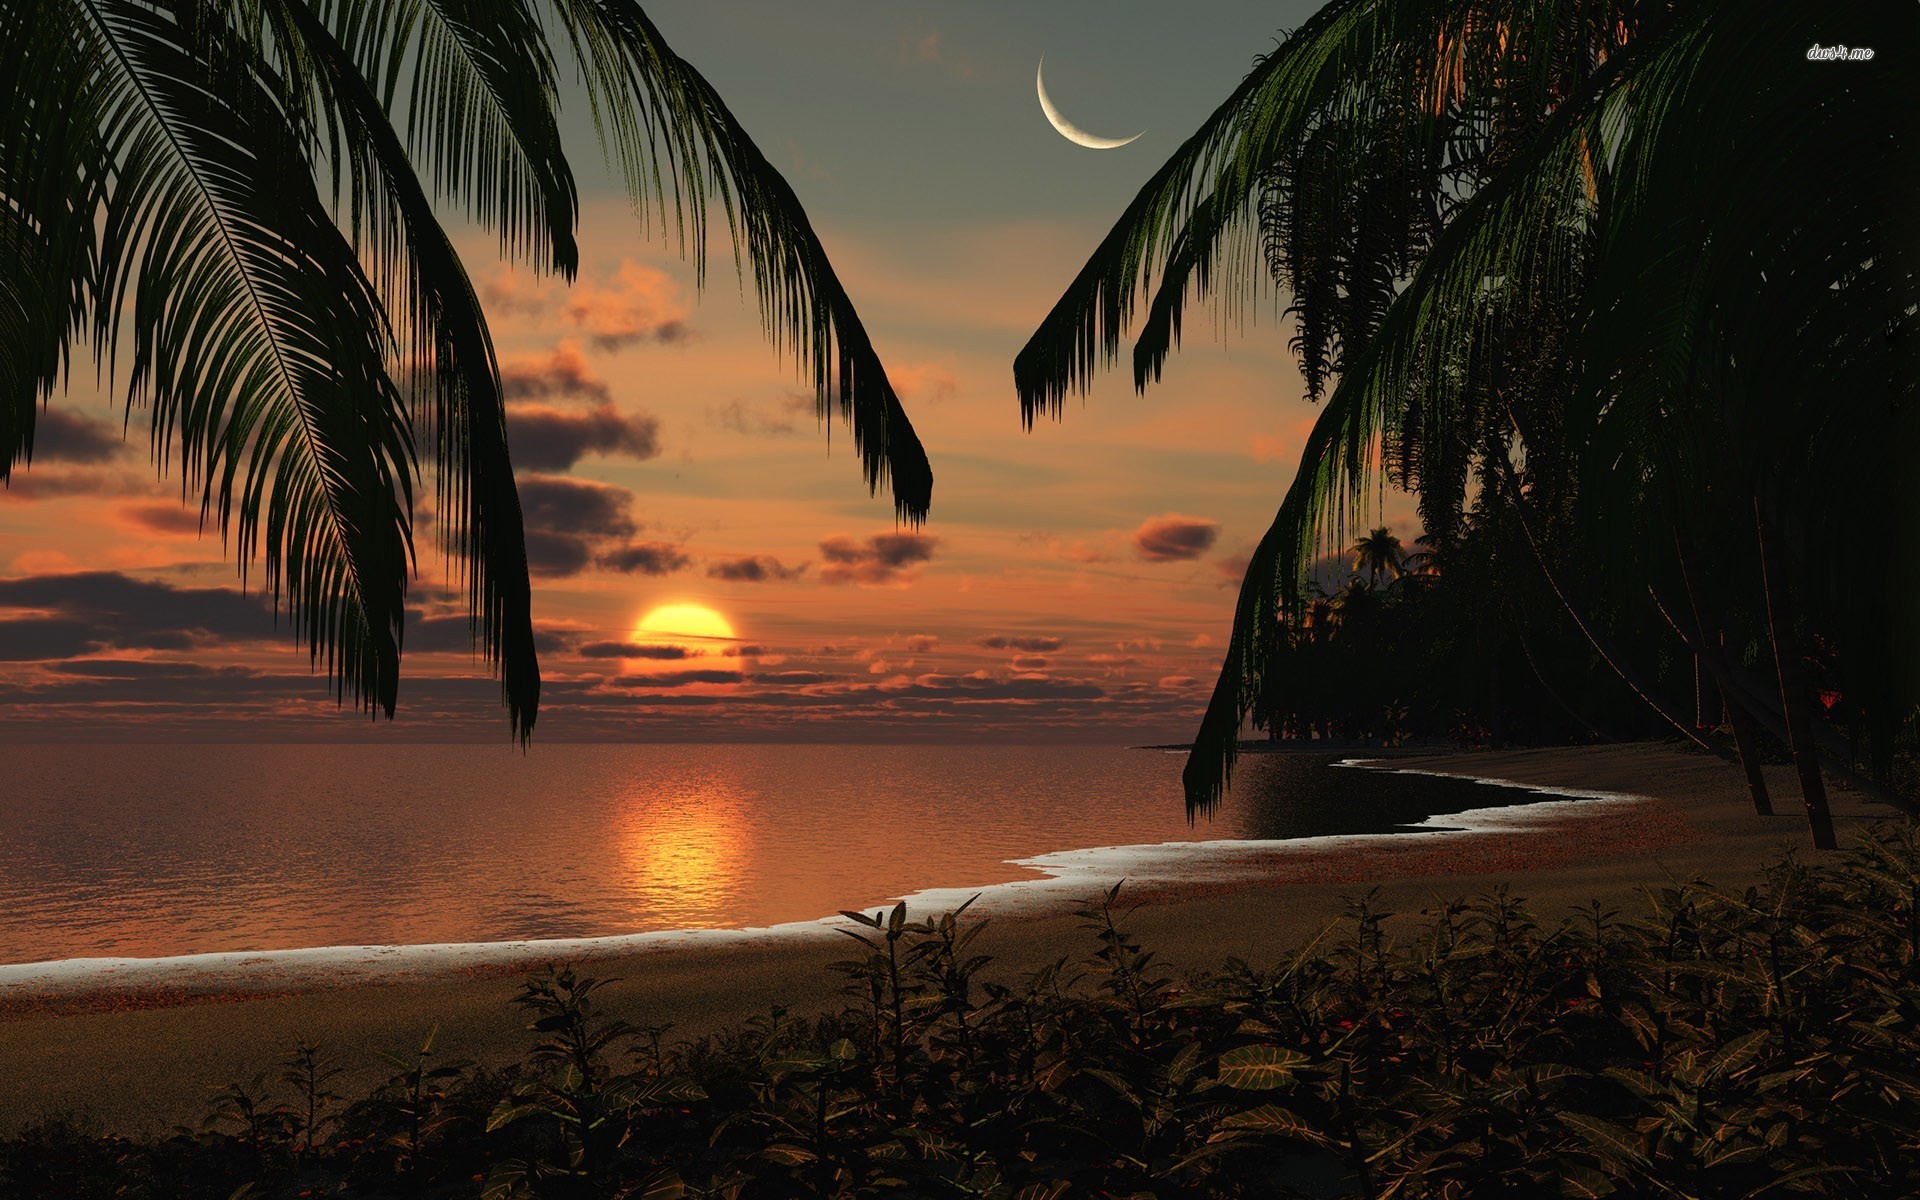 Sunset On The Beach Wallpaper Images Photos a6fj6c52   Yoanucom 1920x1200